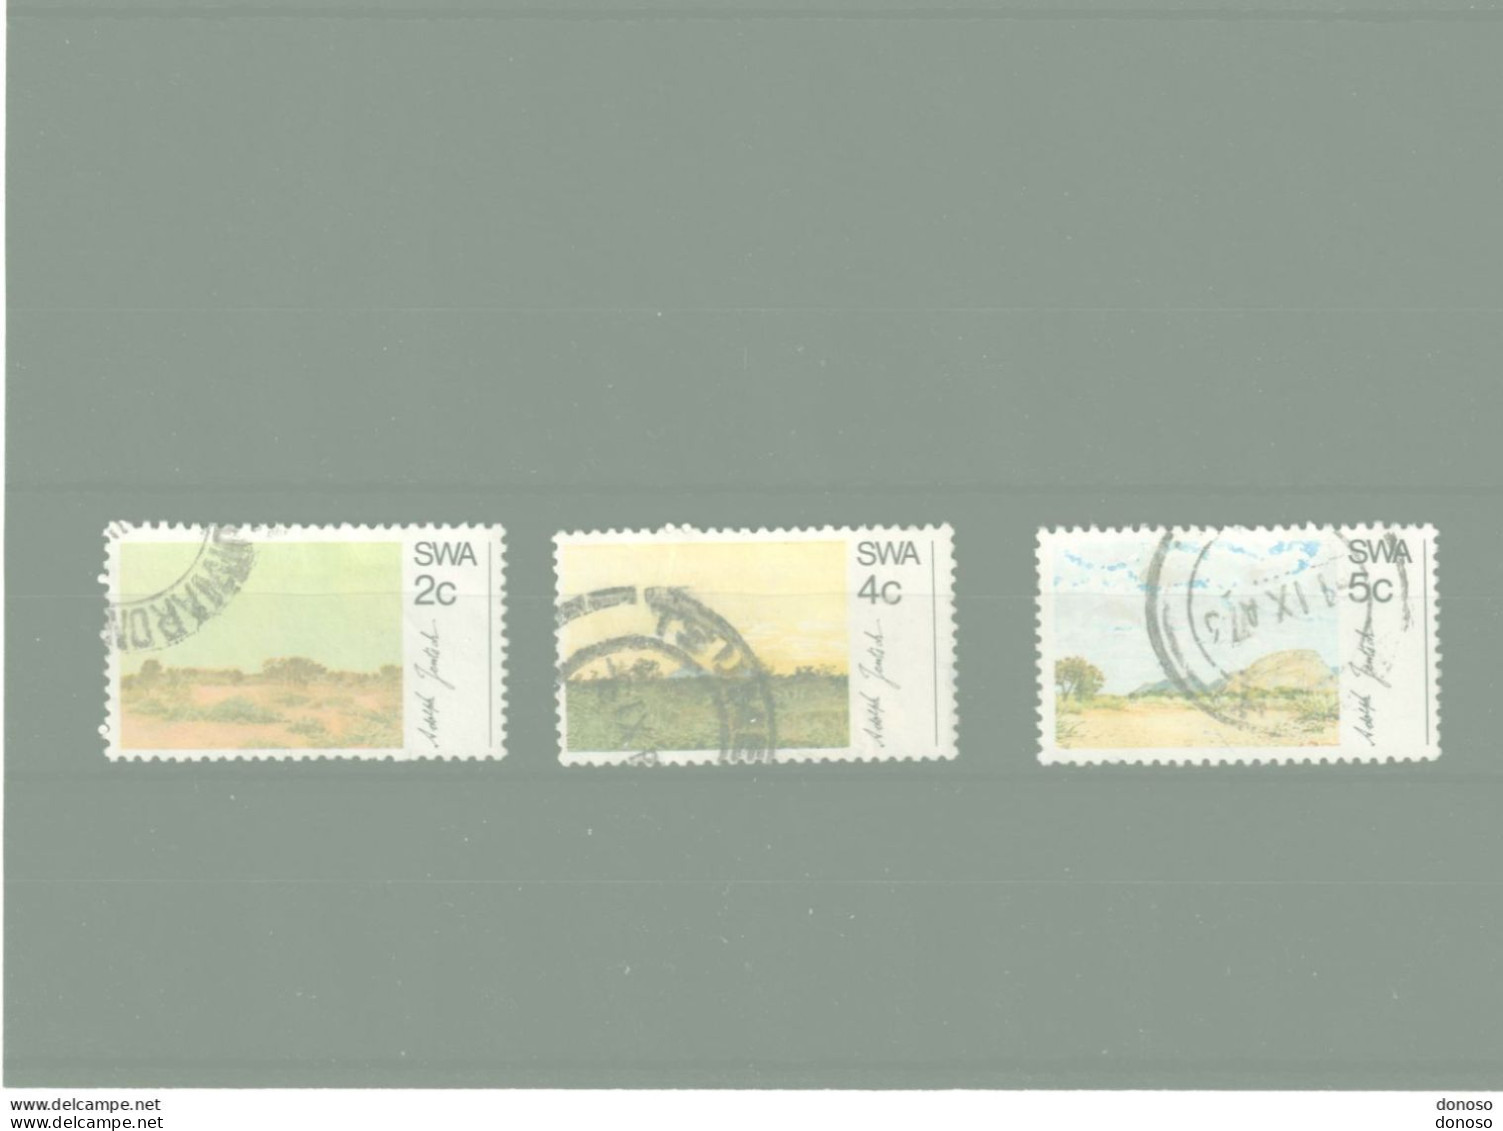 SWA SUD OUEST AFRICAIN 1973 Tableaux De Jentsch Yvert 313-315 Oblitéré Cote Yv 5 Euros - Zuidwest-Afrika (1923-1990)